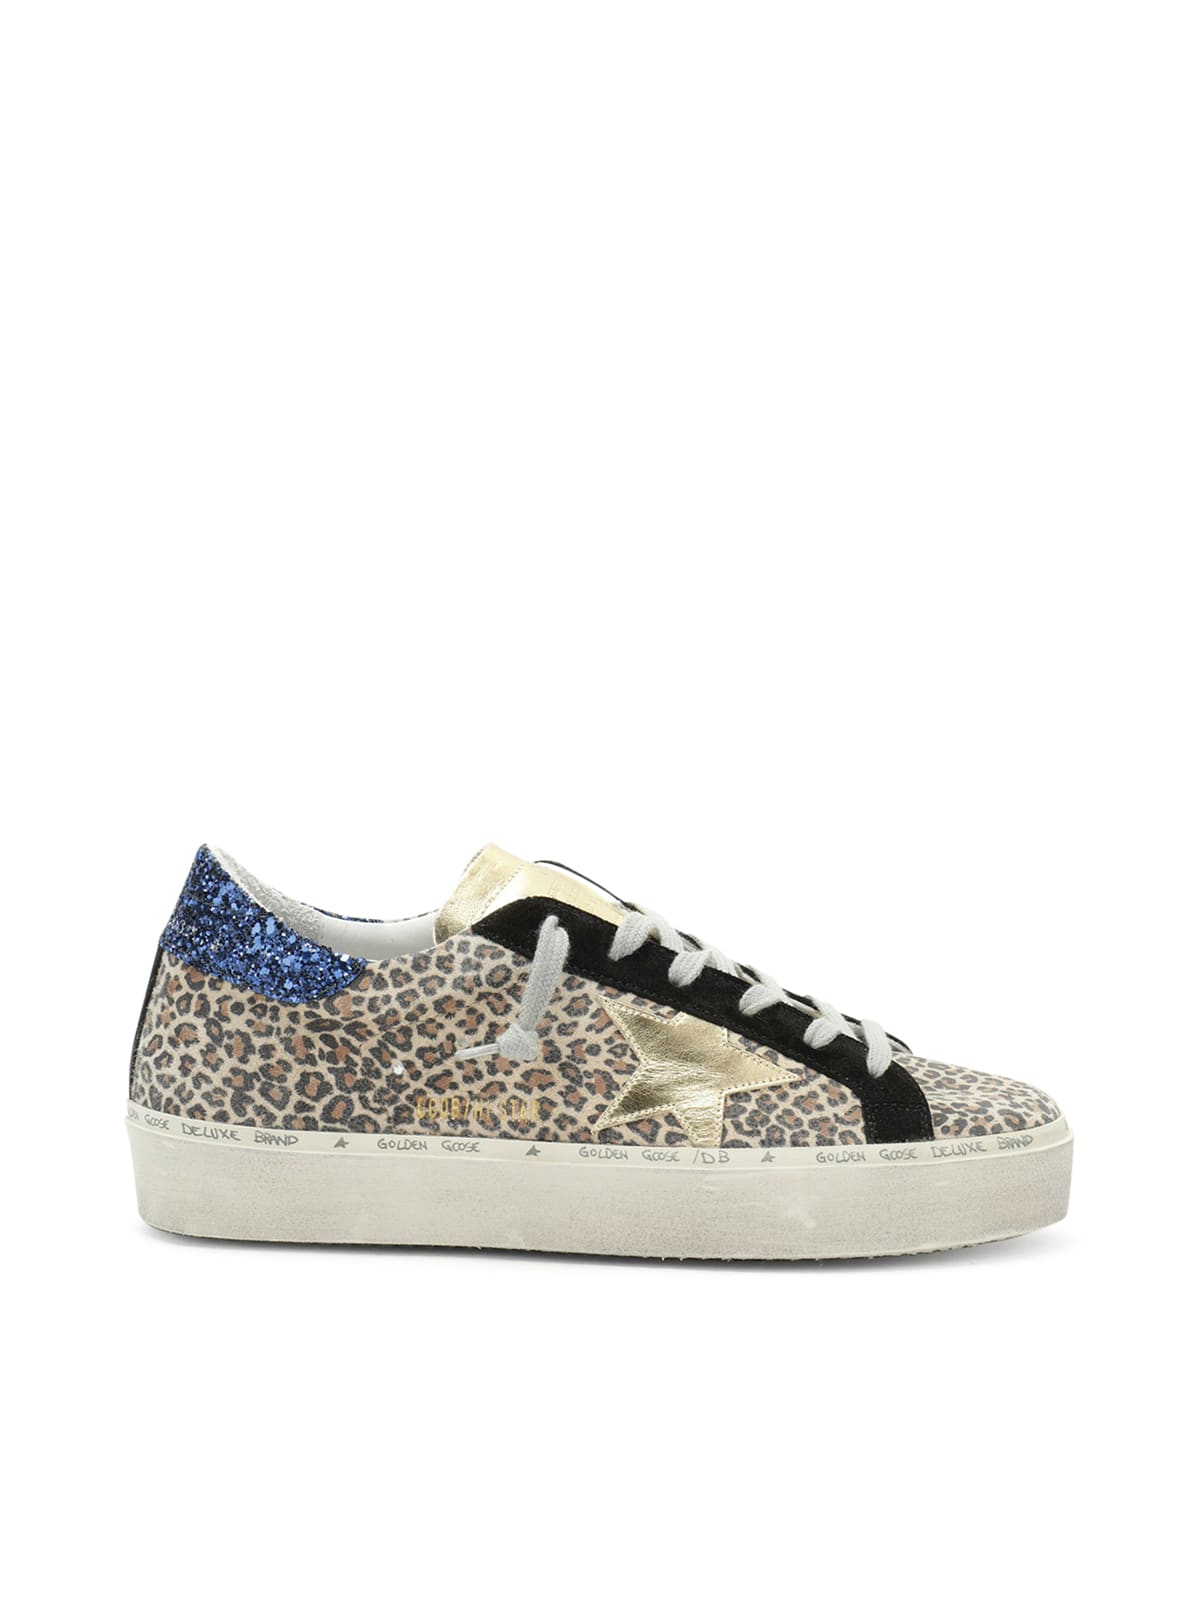 Buy Golden Goose Hi Star Leopard Suede Upper Laminated Star Glitter Heel online, shop Golden Goose shoes with free shipping